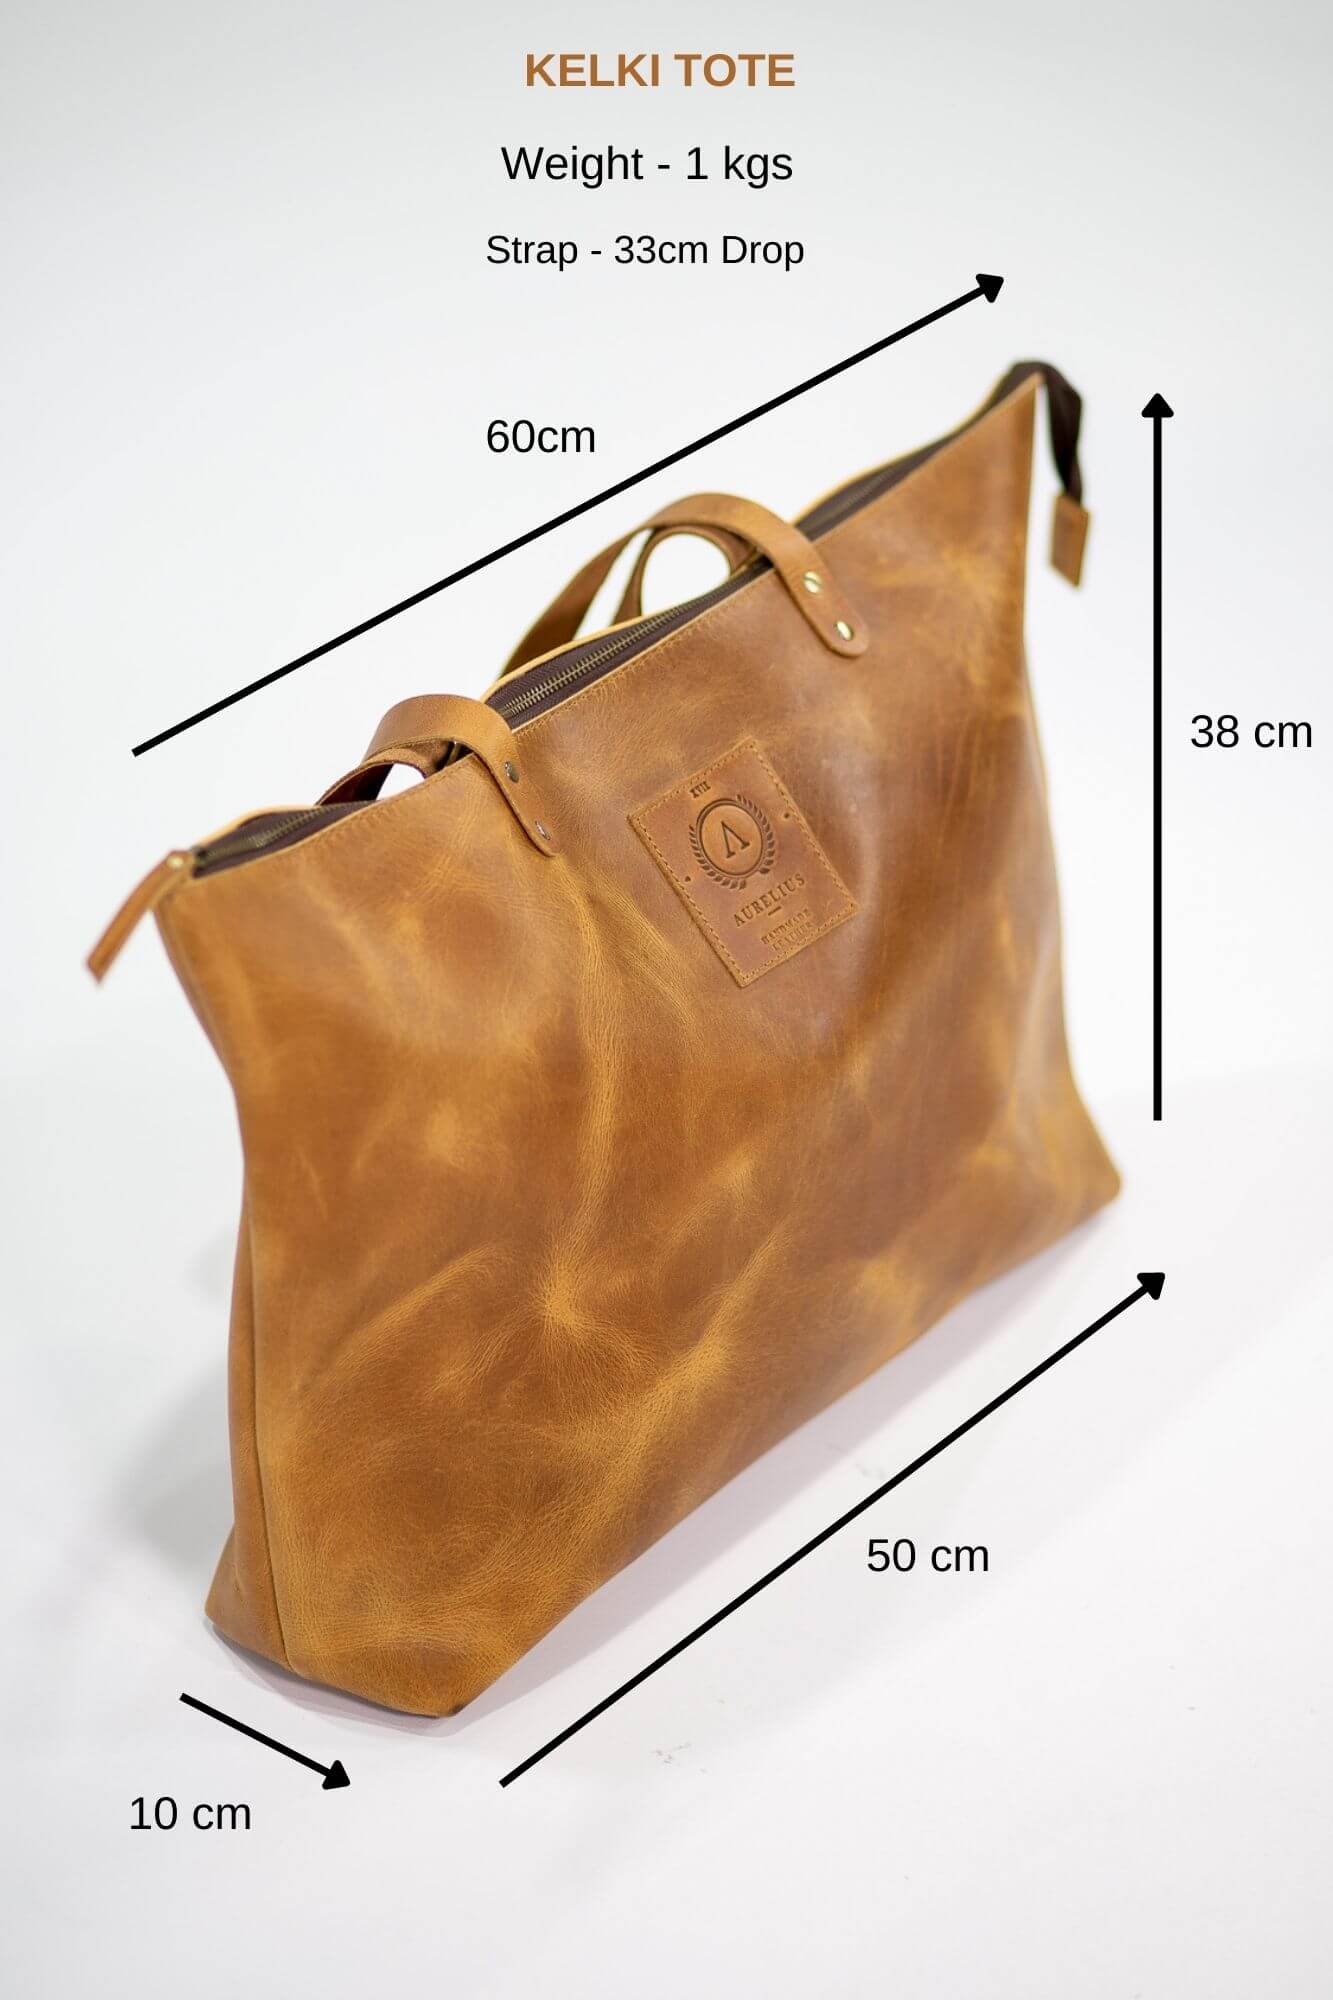 Aurelius Leather Leather Bag Leather Tote Kelki Light Tan Leather Tote Bag